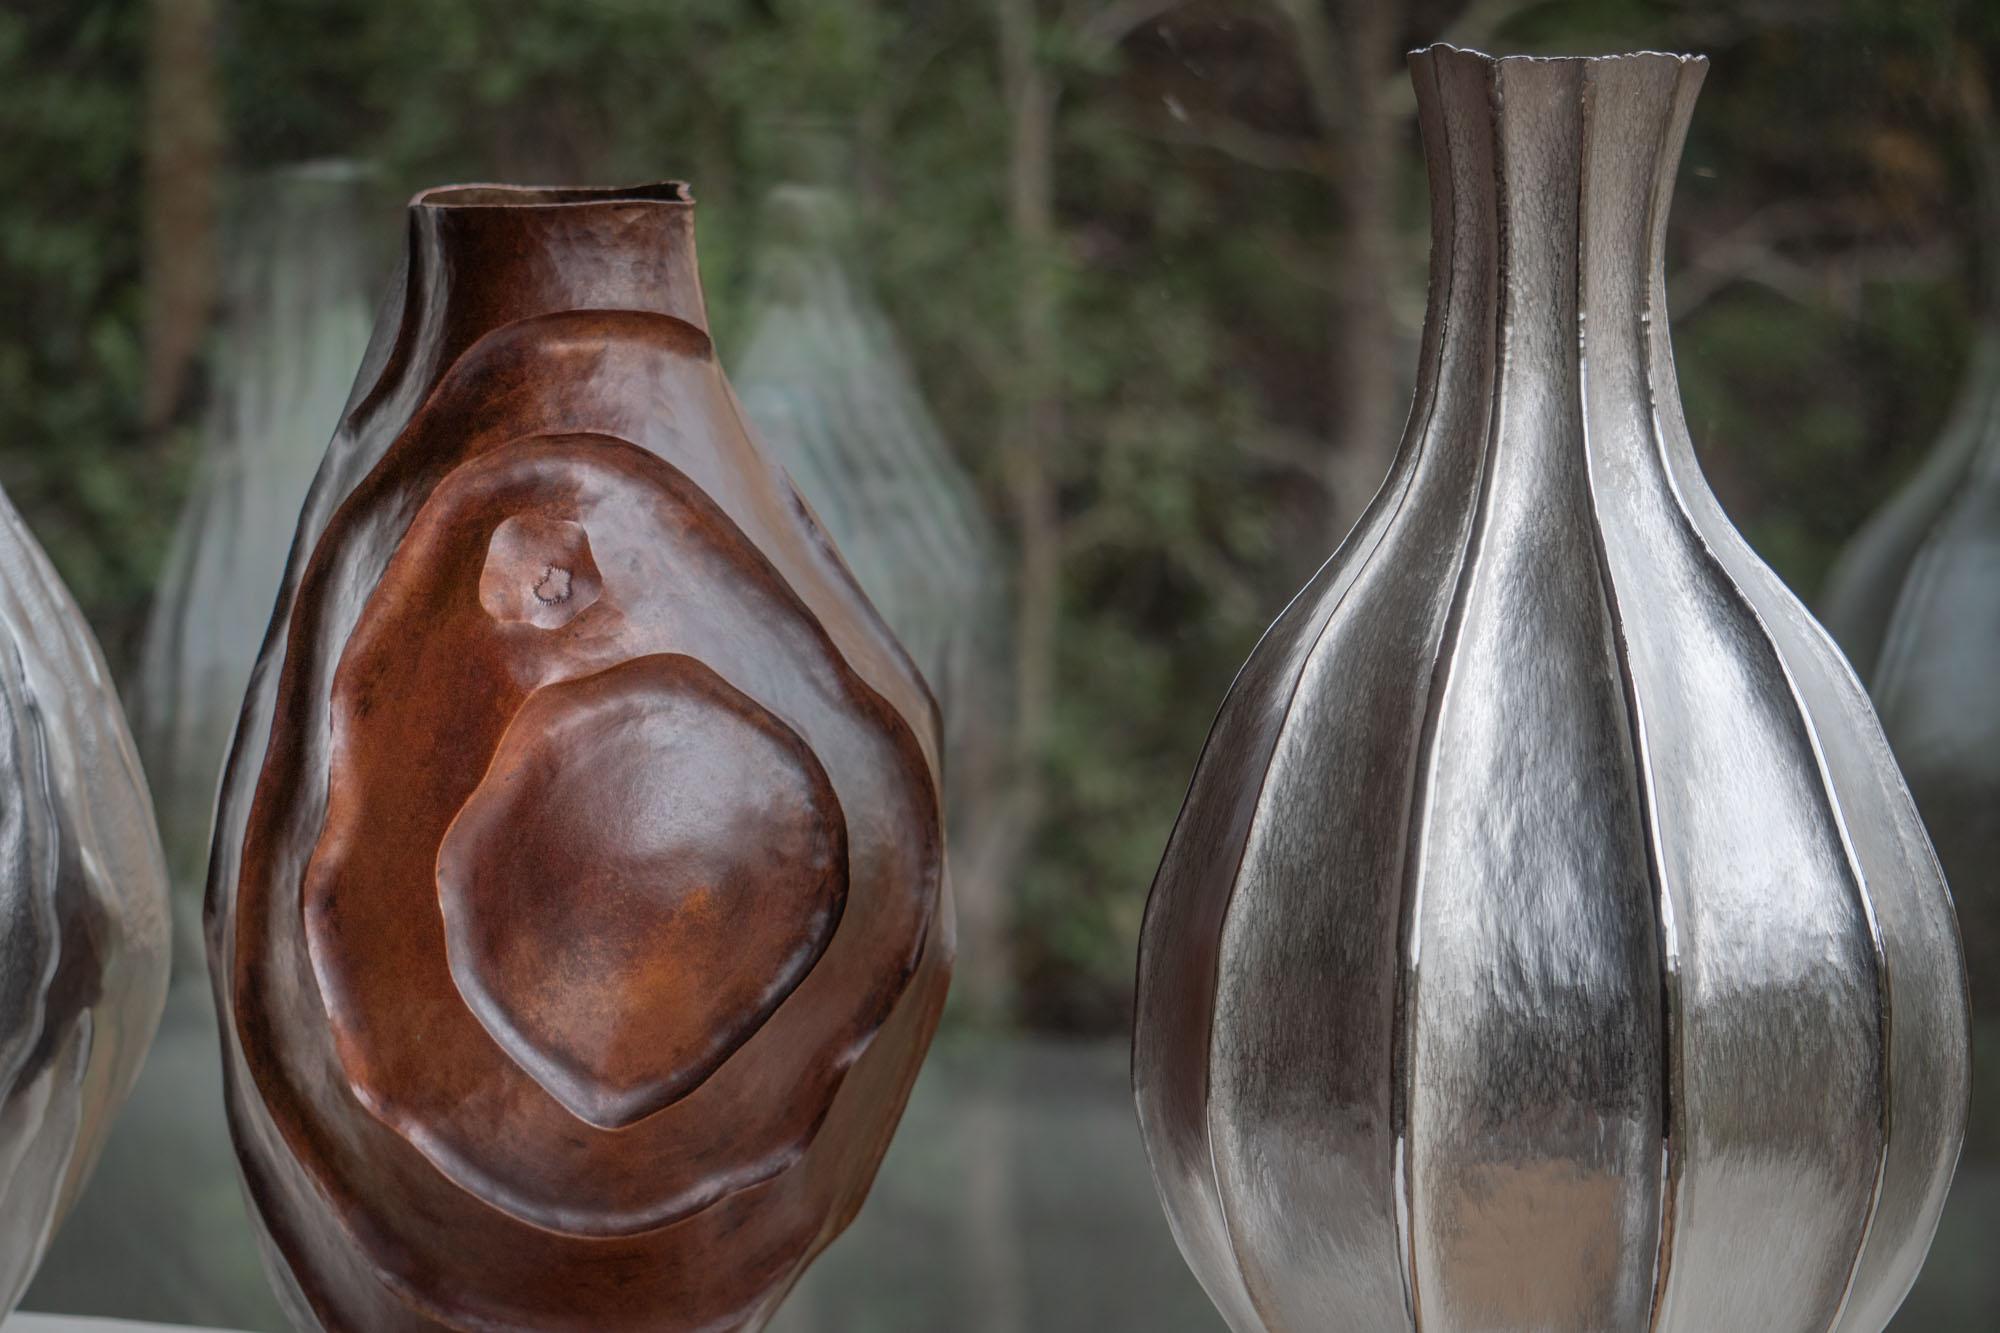 Silvered Emiliano Céliz, Coexistence II, Silver Plated Vase, Argentina, 2020